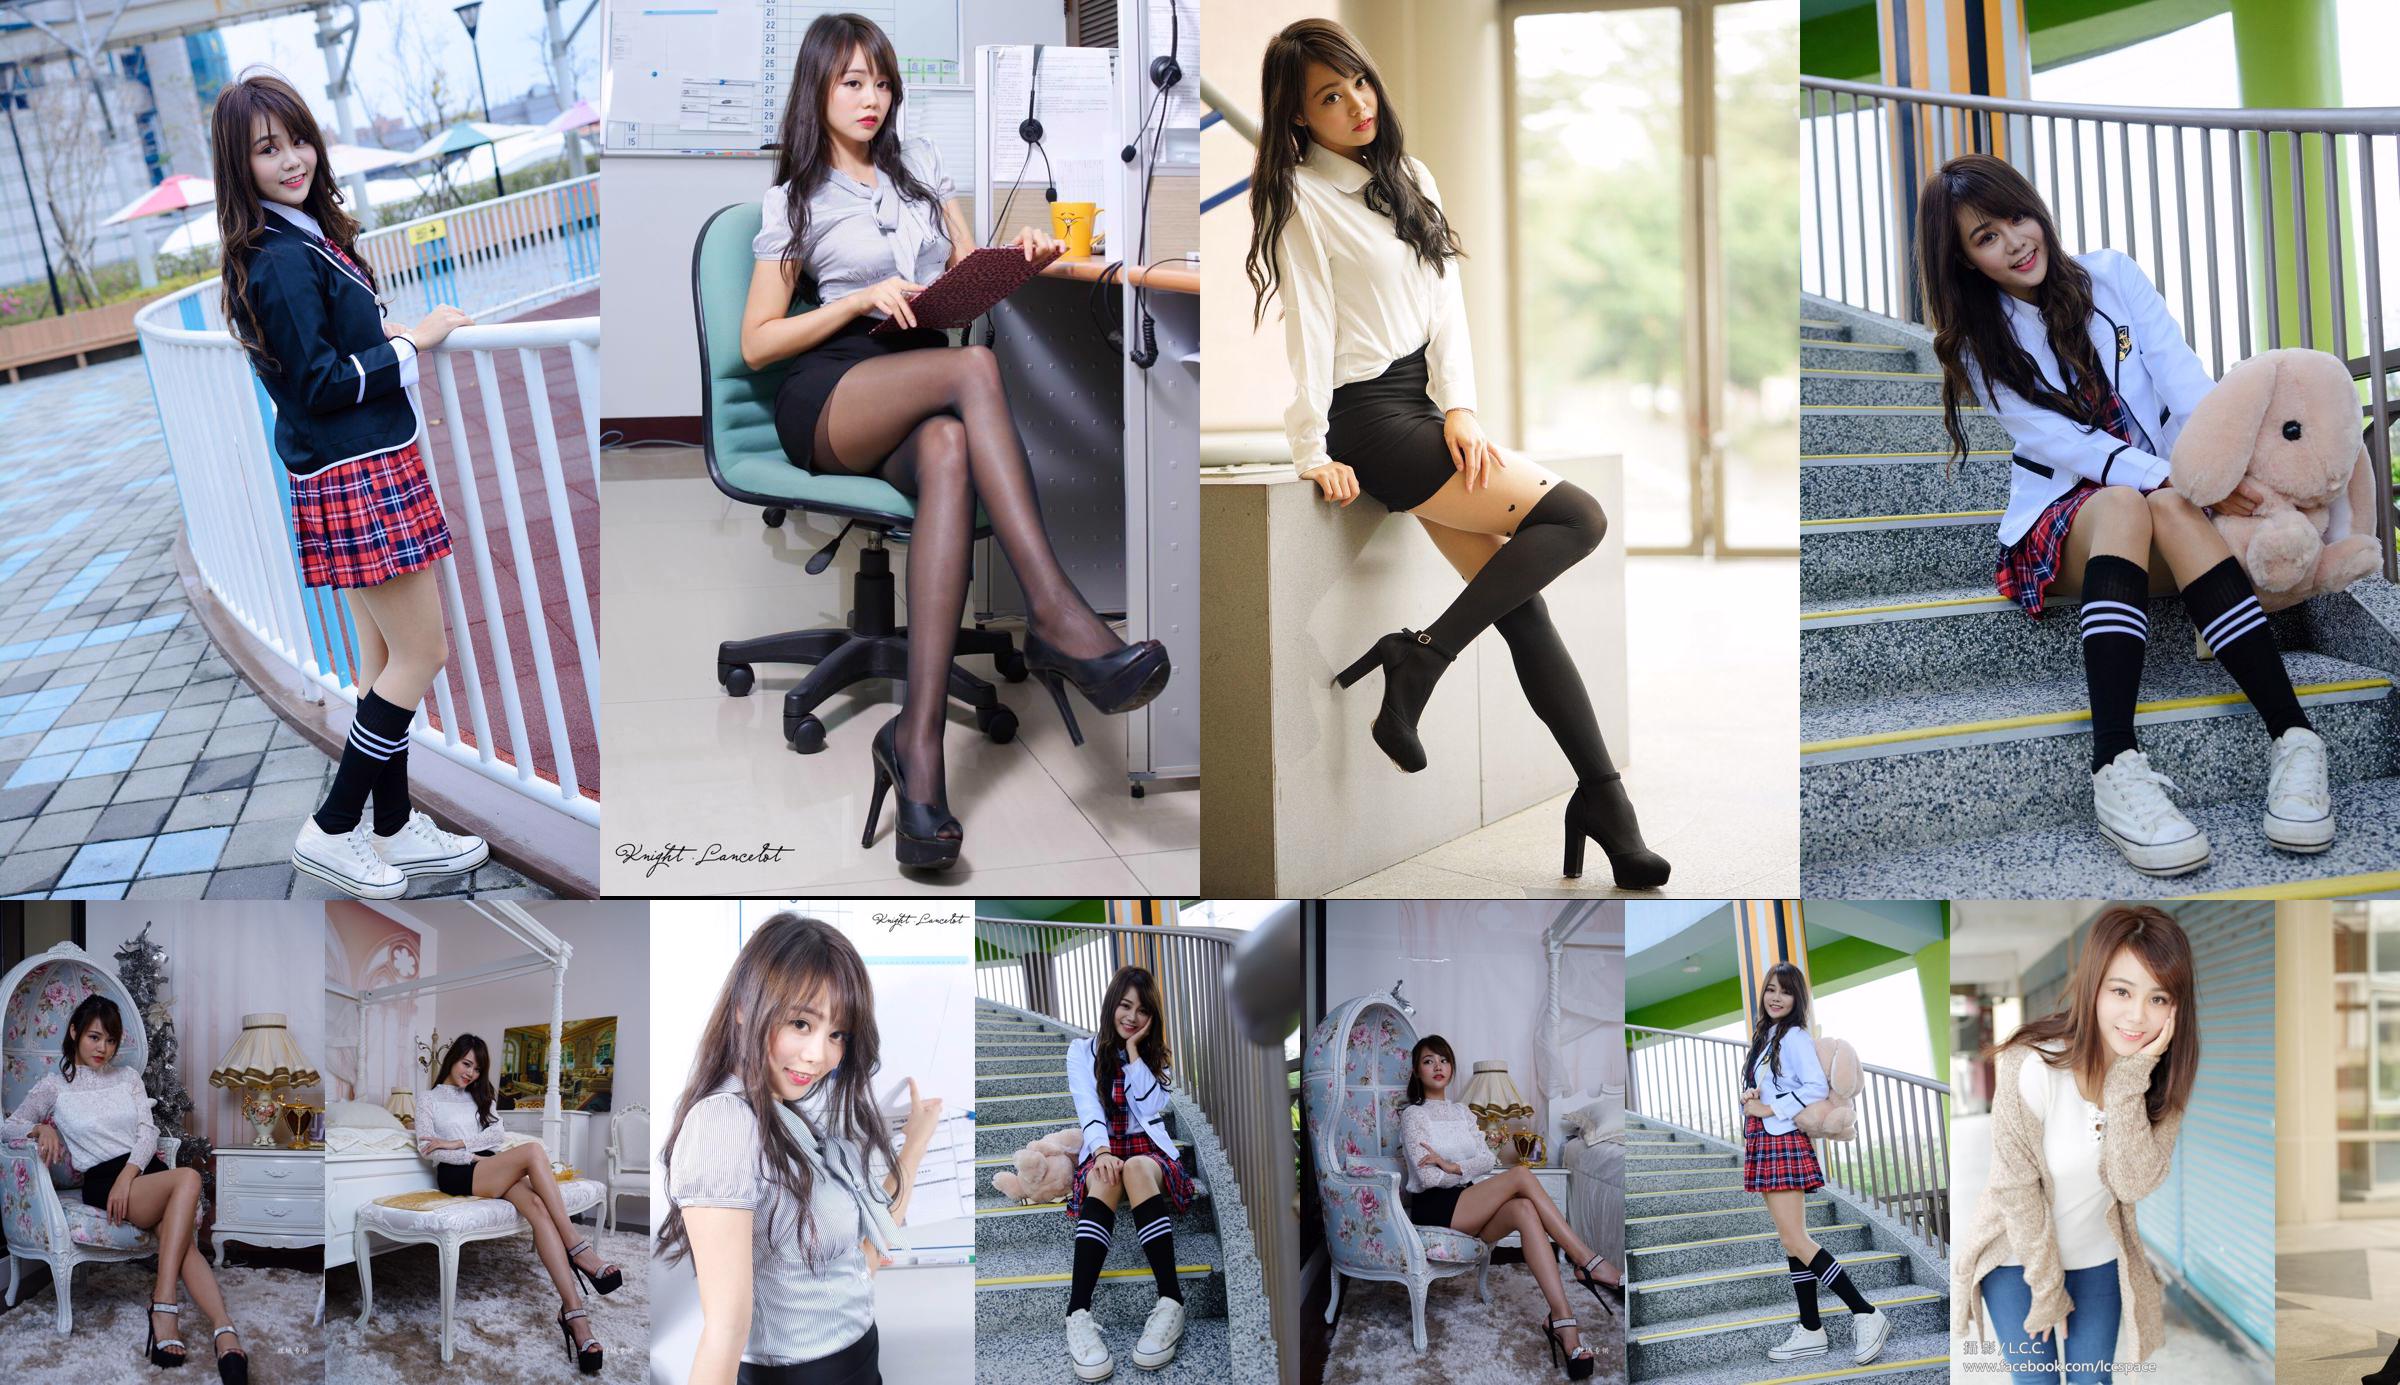 [Taiwan Internet celebrity beauty] Candy Sun Huitong "Asian University Outdoor Shooting" No.4cbda3 Page 1